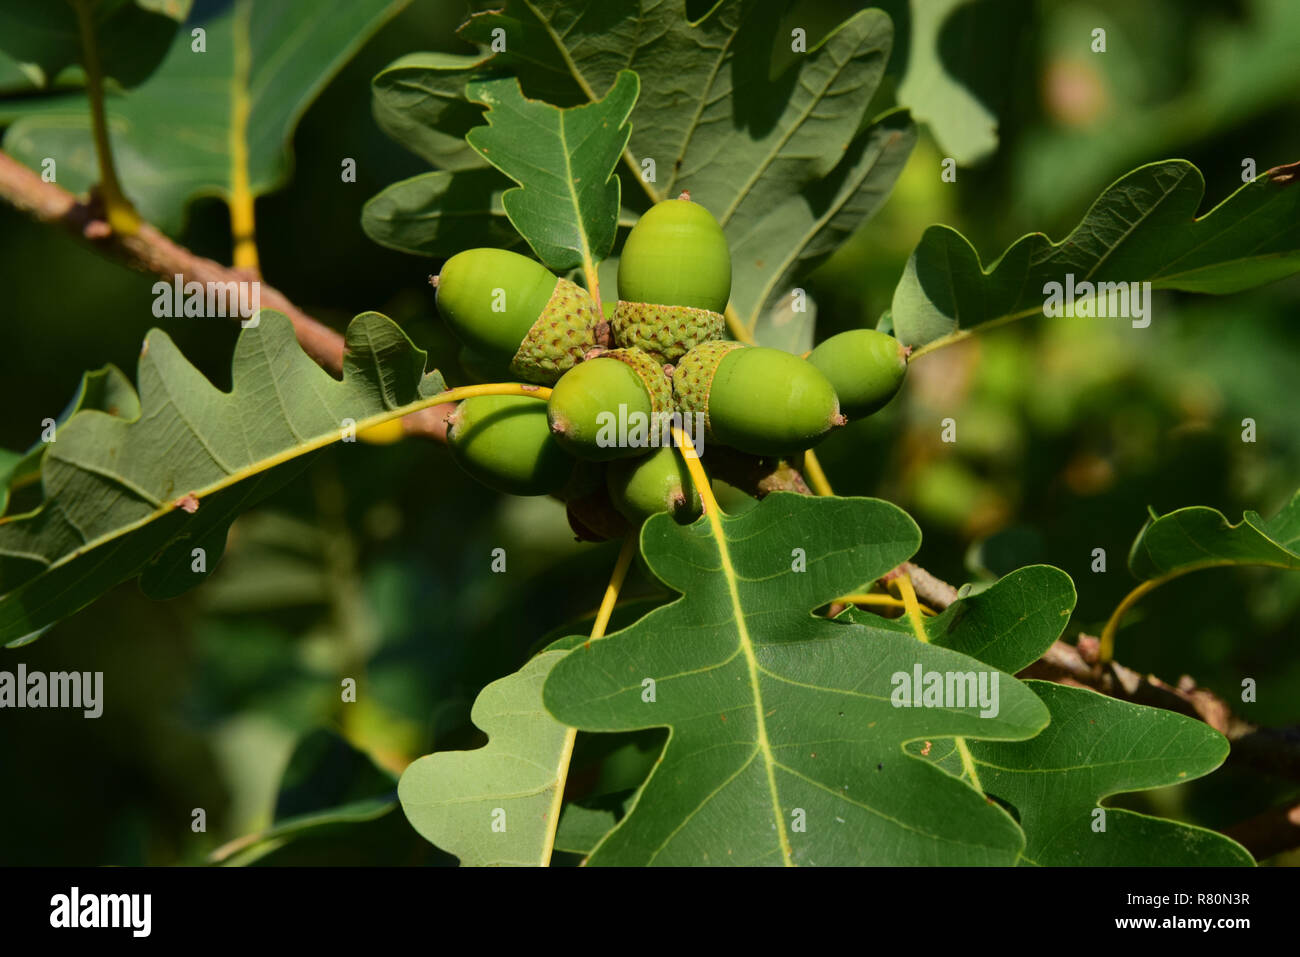 Durmast Oak, Sessile Oak (Quercus petraea). Twig with leaves and unripe acorns. Germany Stock Photo